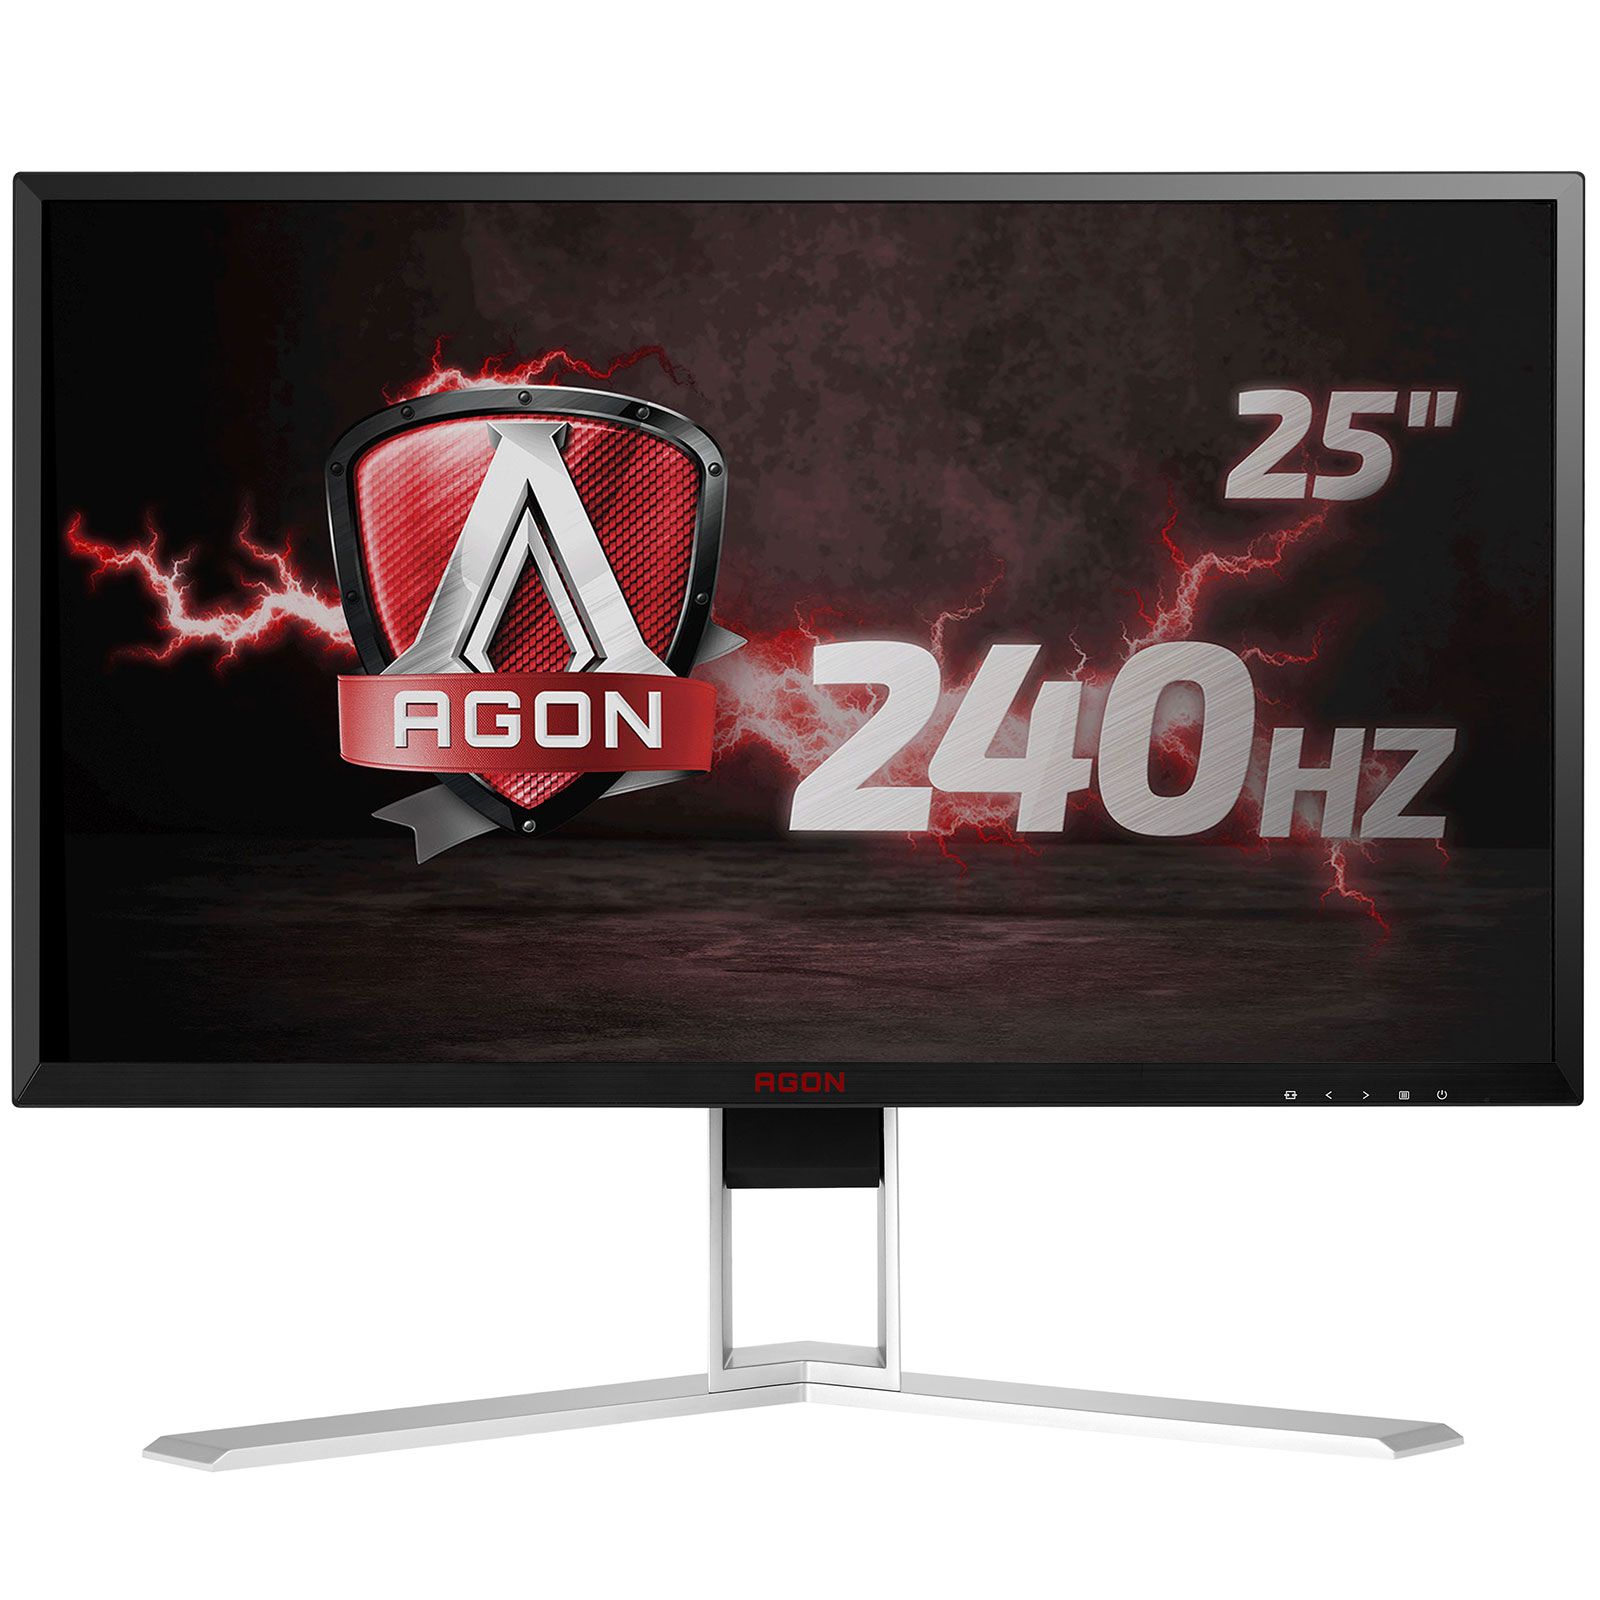 Monitor LED Gaming AOC Agon AG251FZ, 25″, Full HD, 1ms, 240Hz, Display Port, DVI, HDMI, USB, FreeSync, Flicker Free, Boxe, Negru Monitoare Gaming